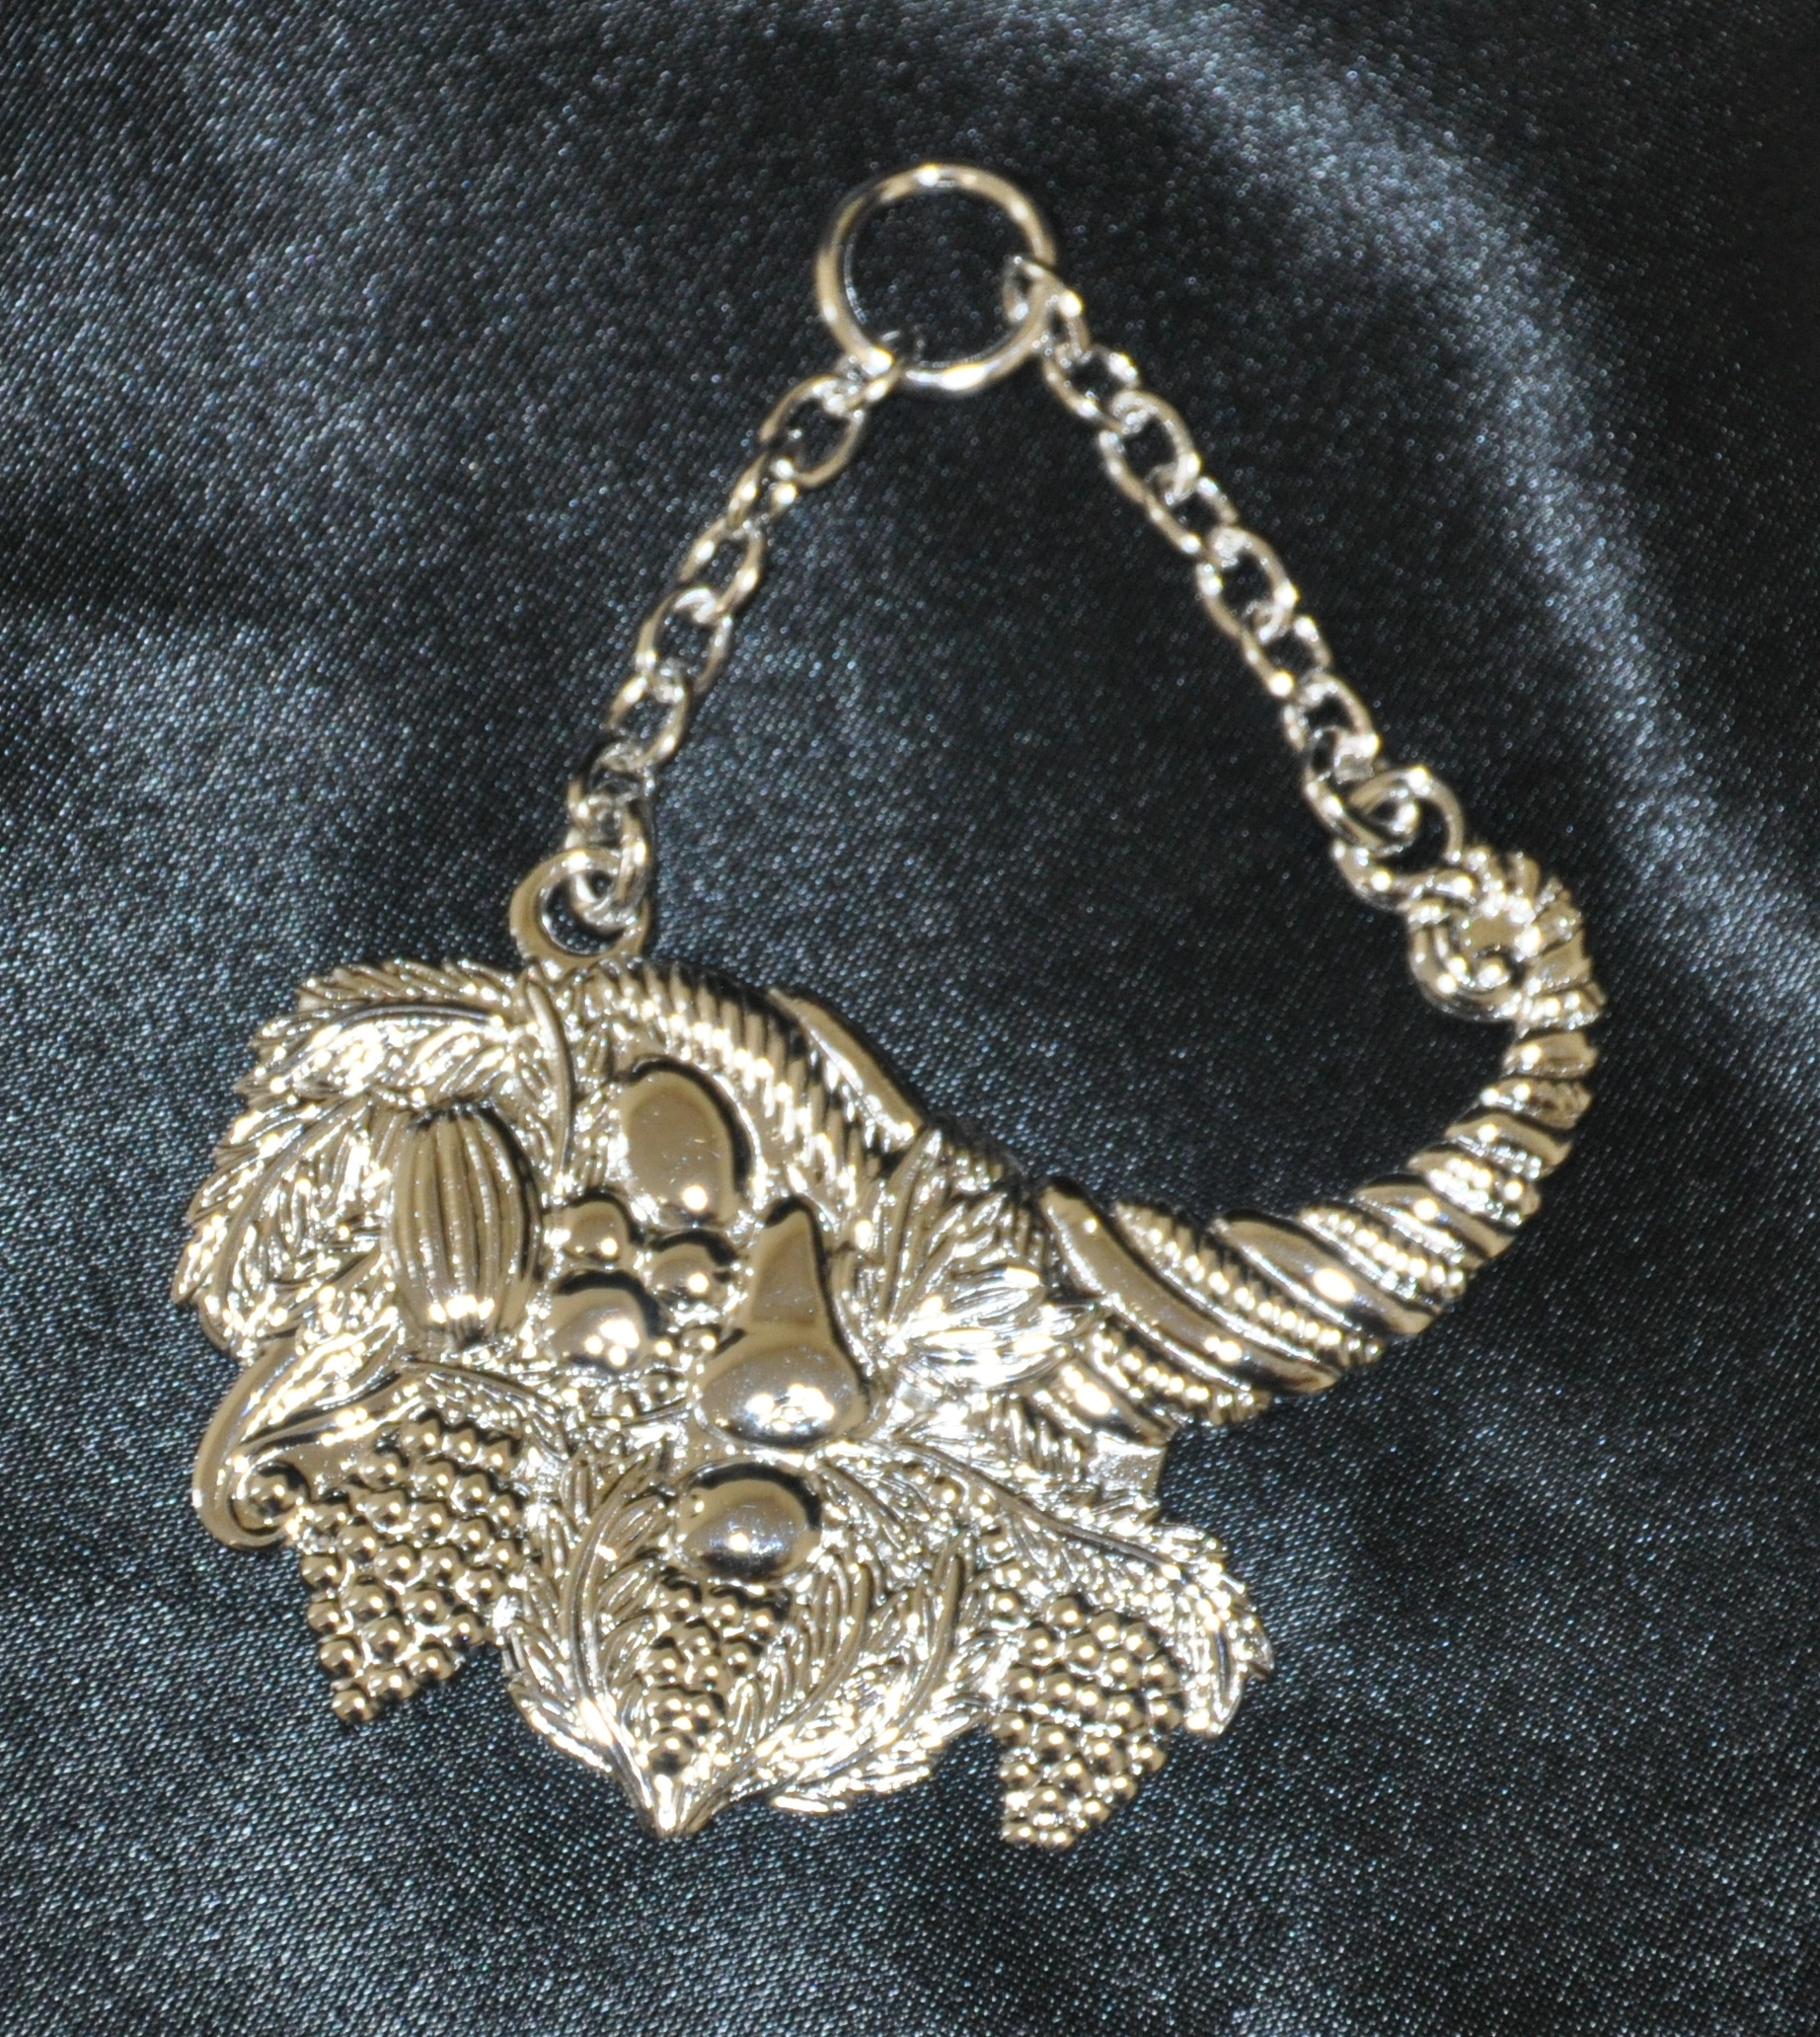 Craft Lodge Officers Collar Jewel - Steward Cornucopia (Scottish) - Silver